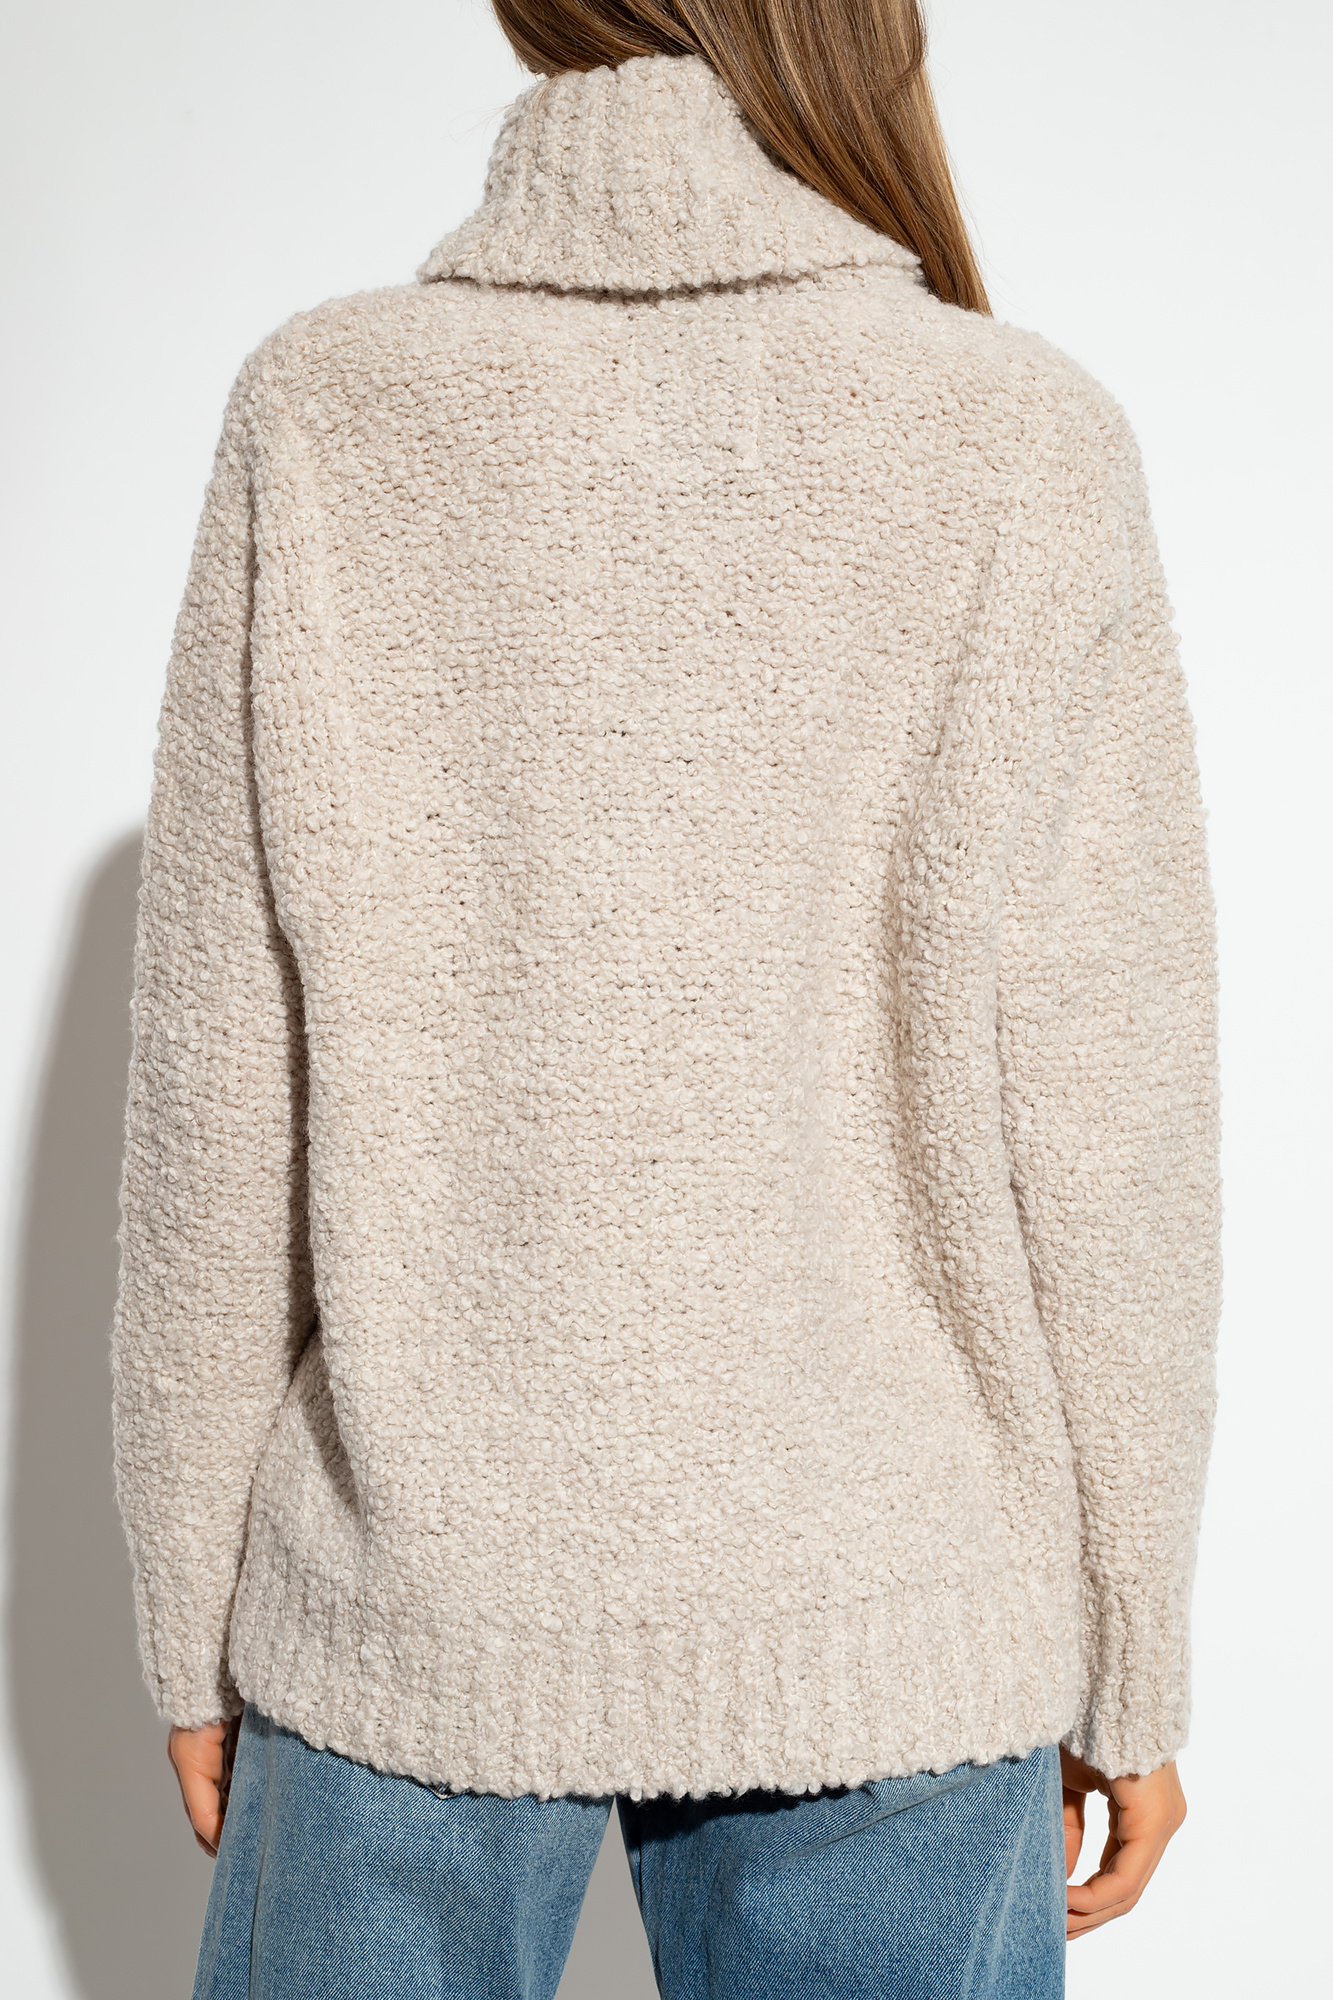 Emporio Armani Wool turtleneck sweater